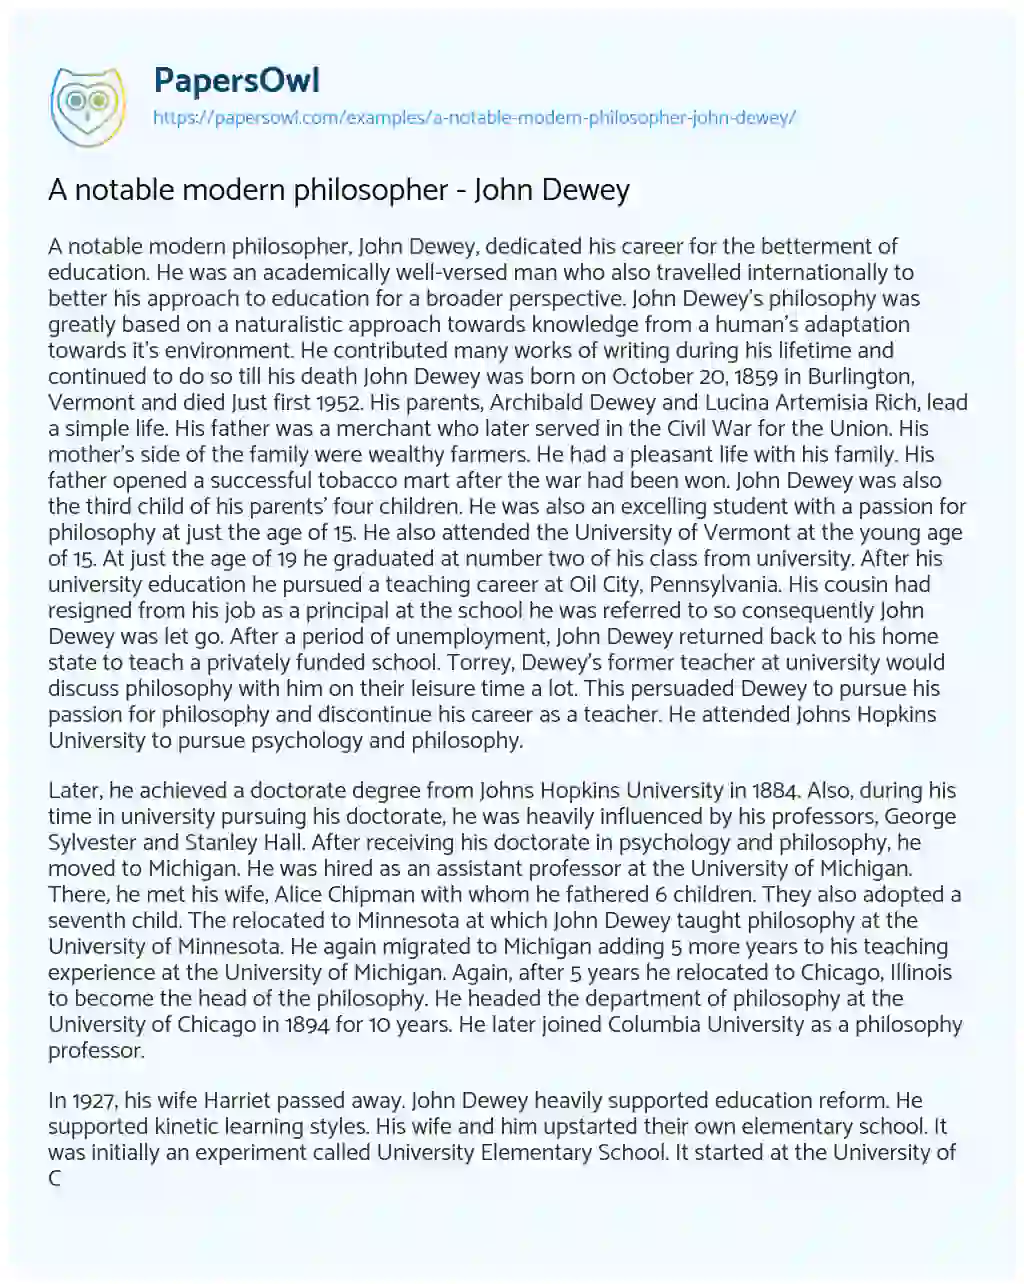 Essay on A Notable Modern Philosopher – John Dewey